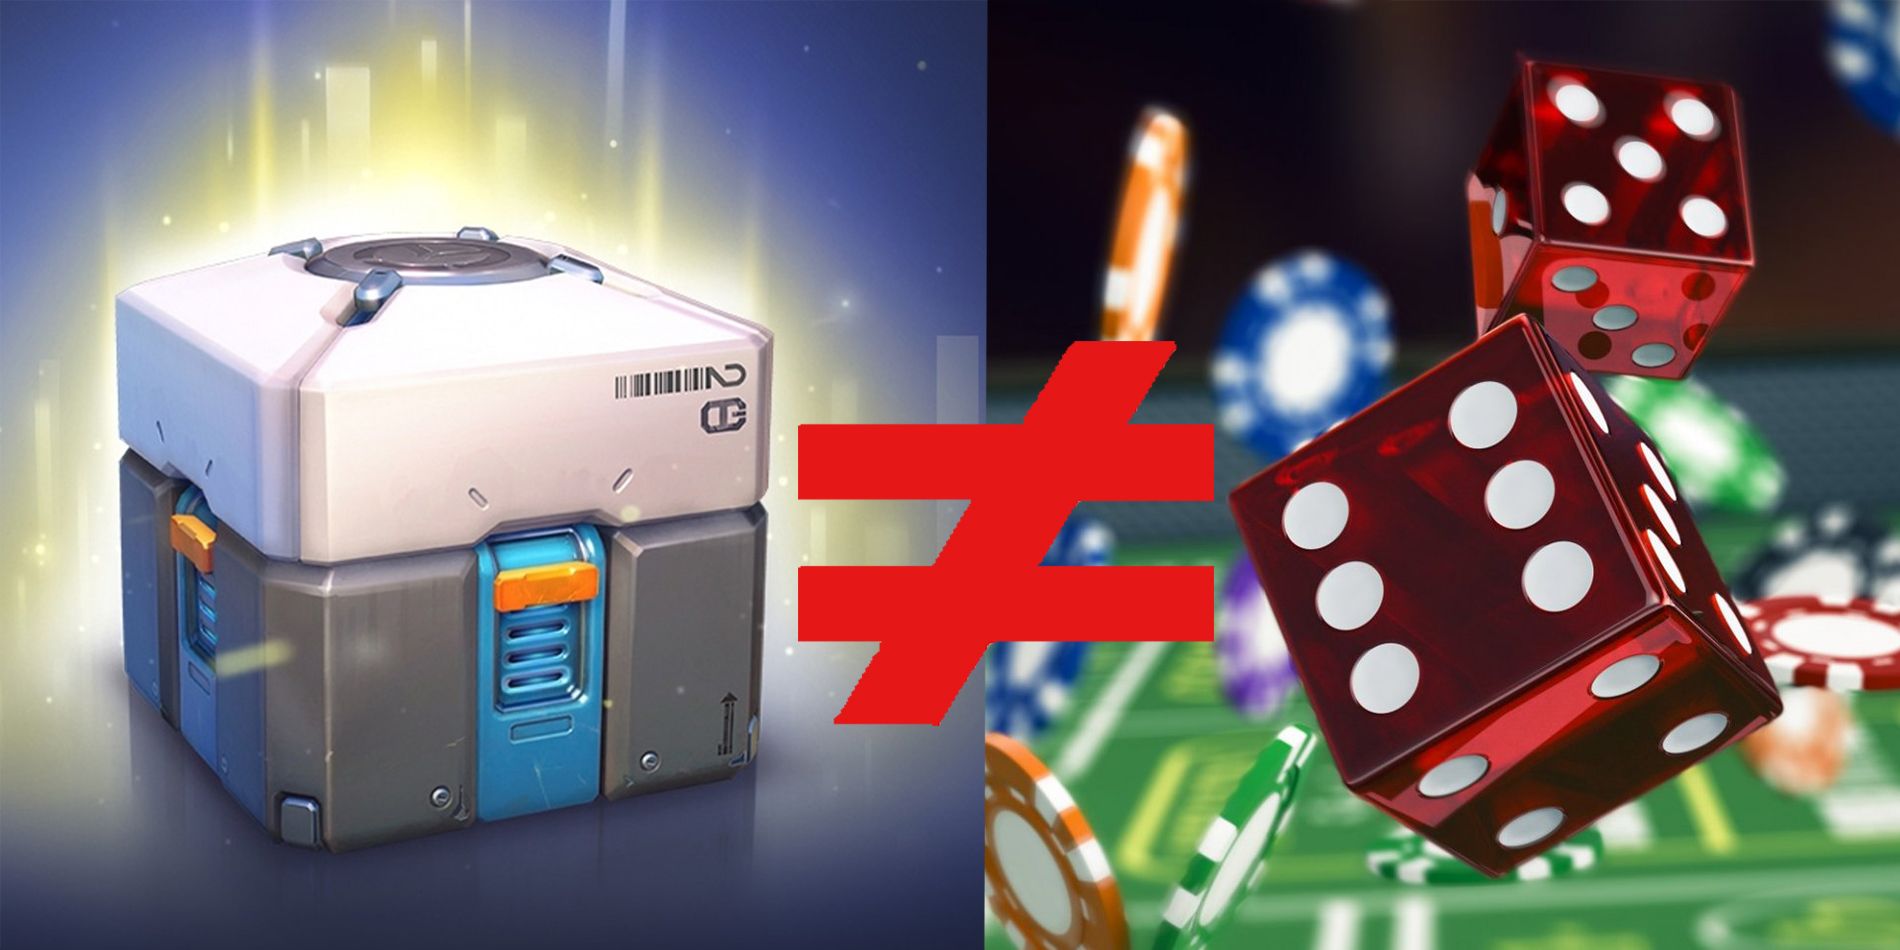 EA loot box lawsuit fails in bid to brand games as gambling